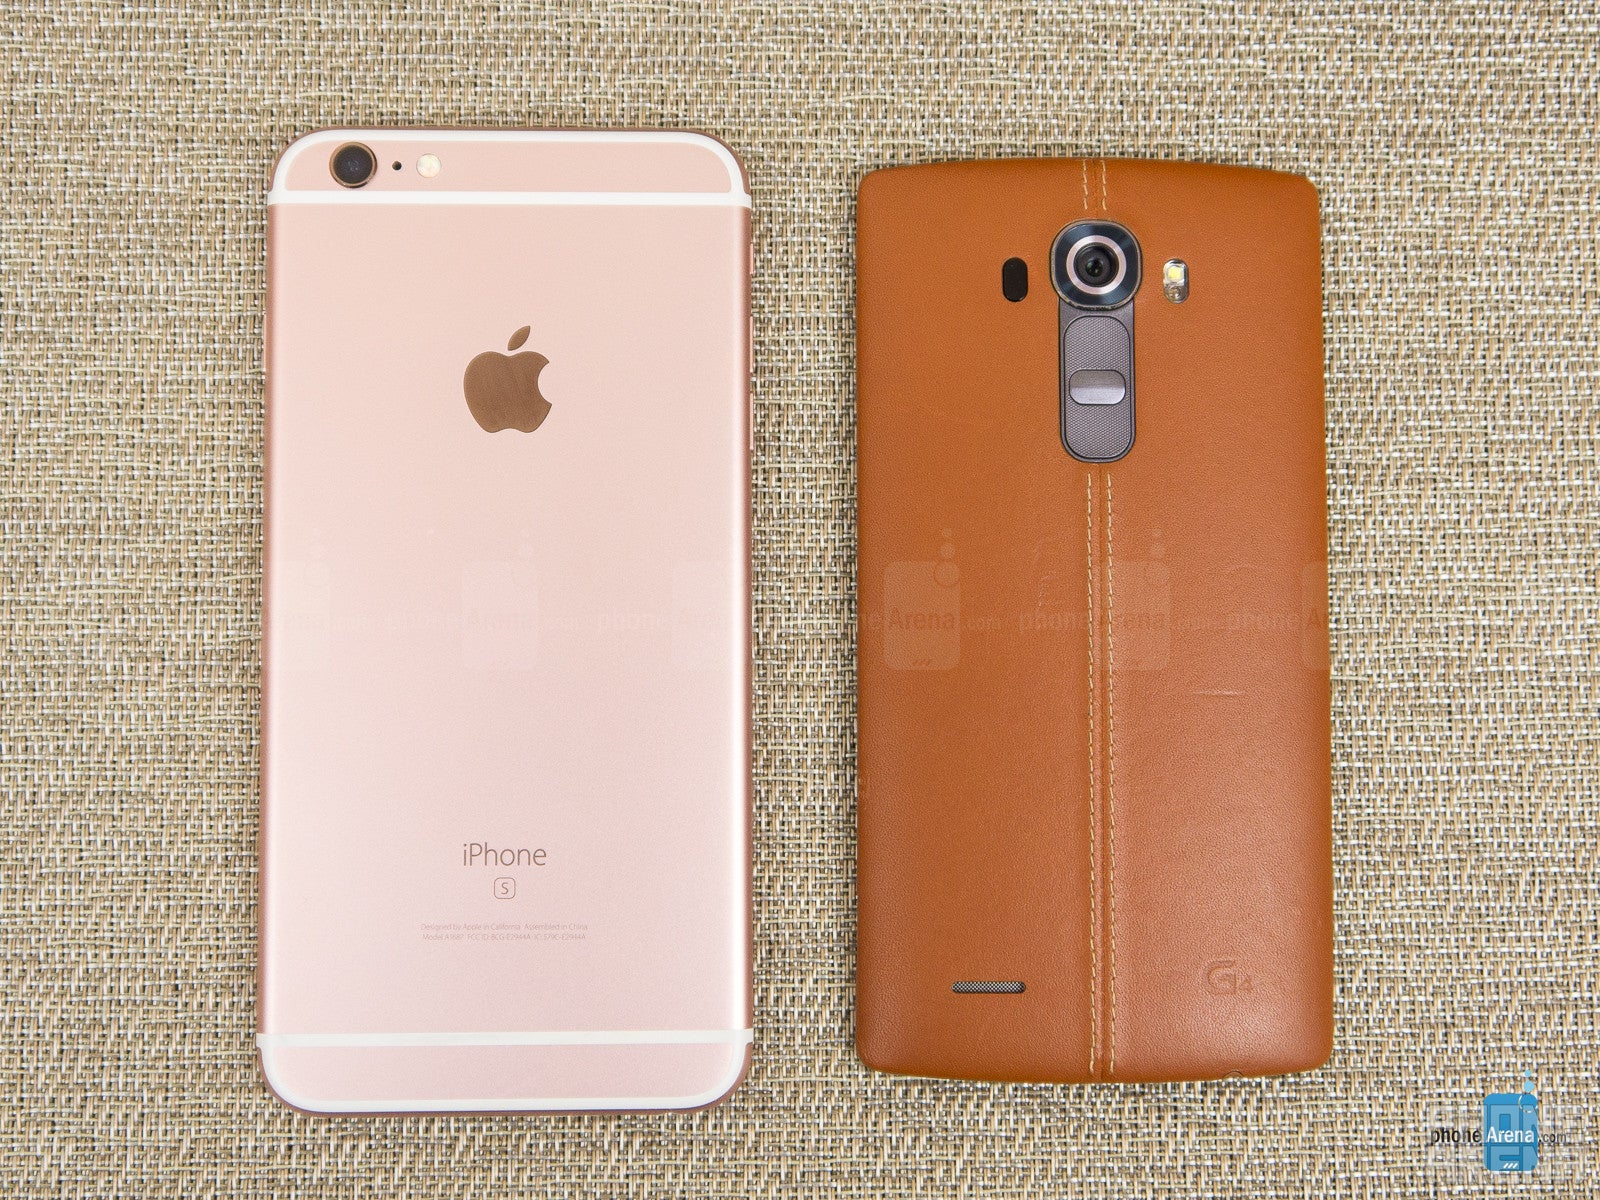 Apple iPhone 6s Plus vs LG G4